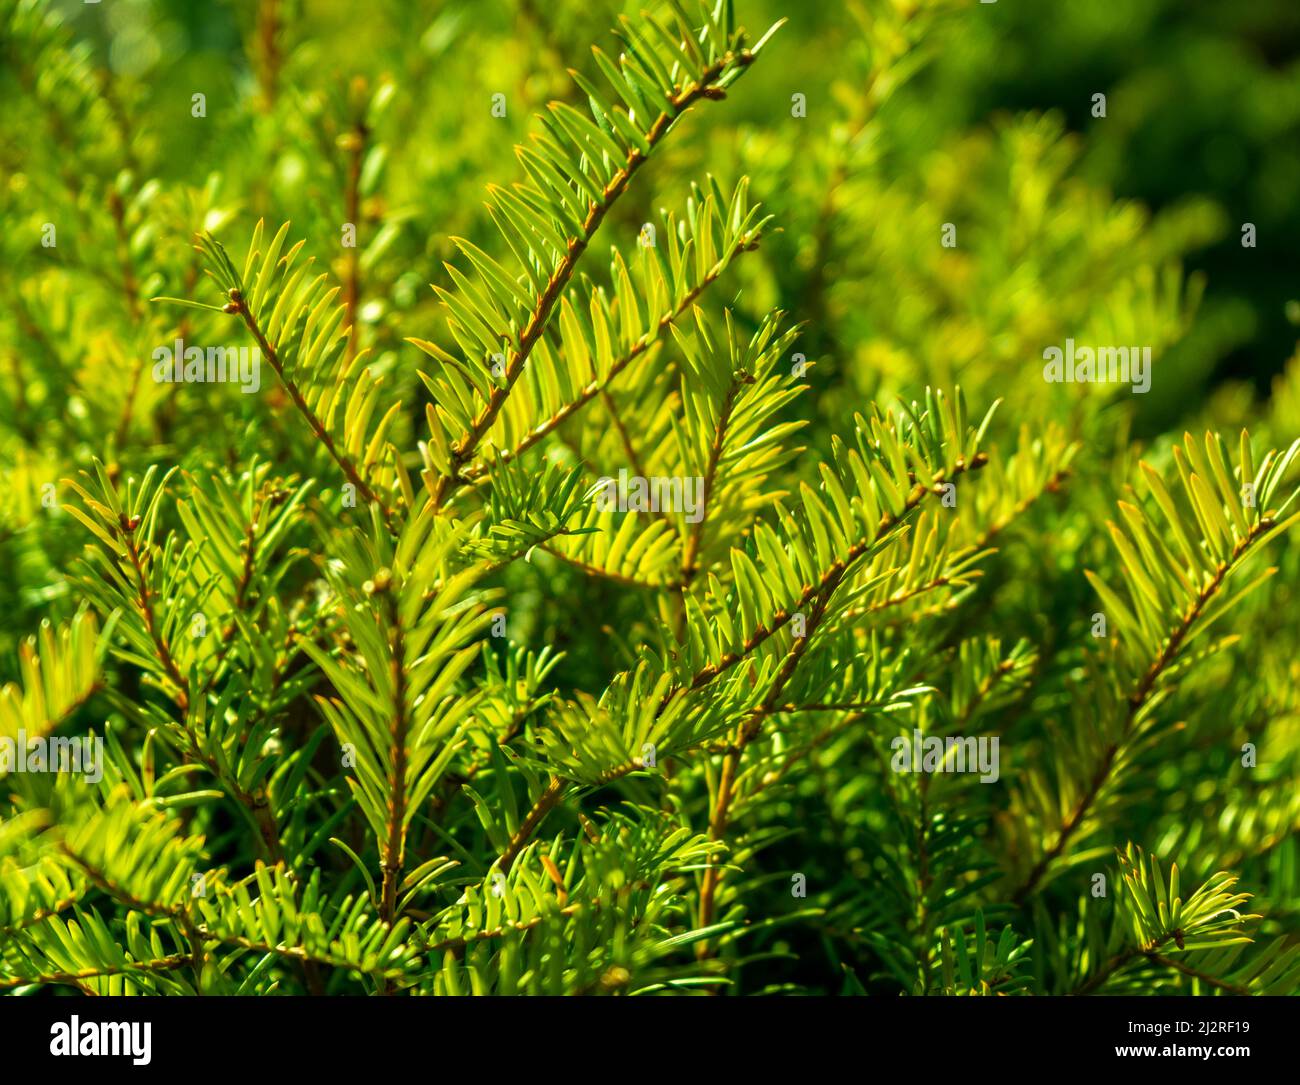 Closeup shot of a sunny illuminated coniferous plant Stock Photo